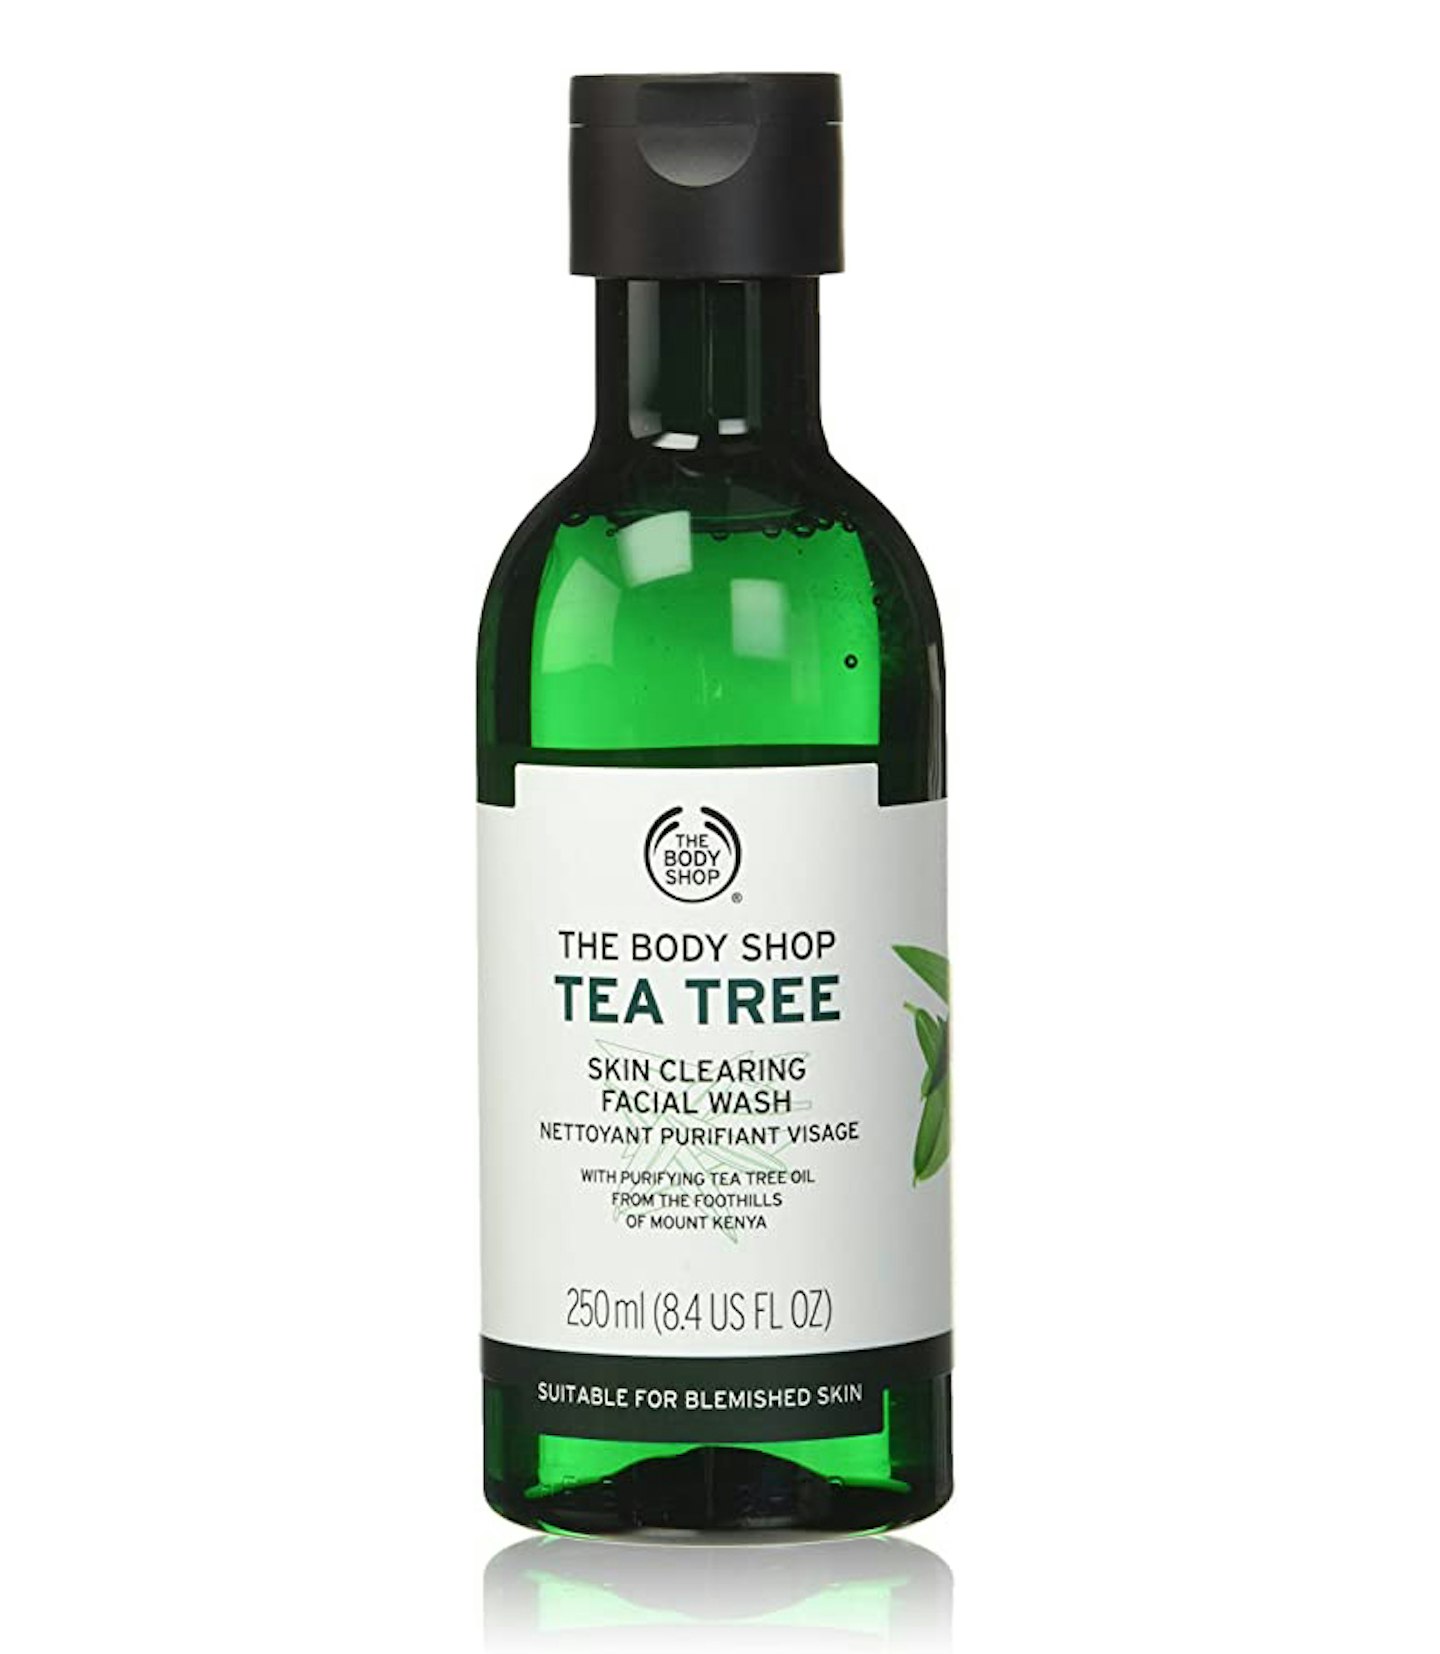 The Body Shop Tea Tree Skin Clearing Facial Wash, £8.50